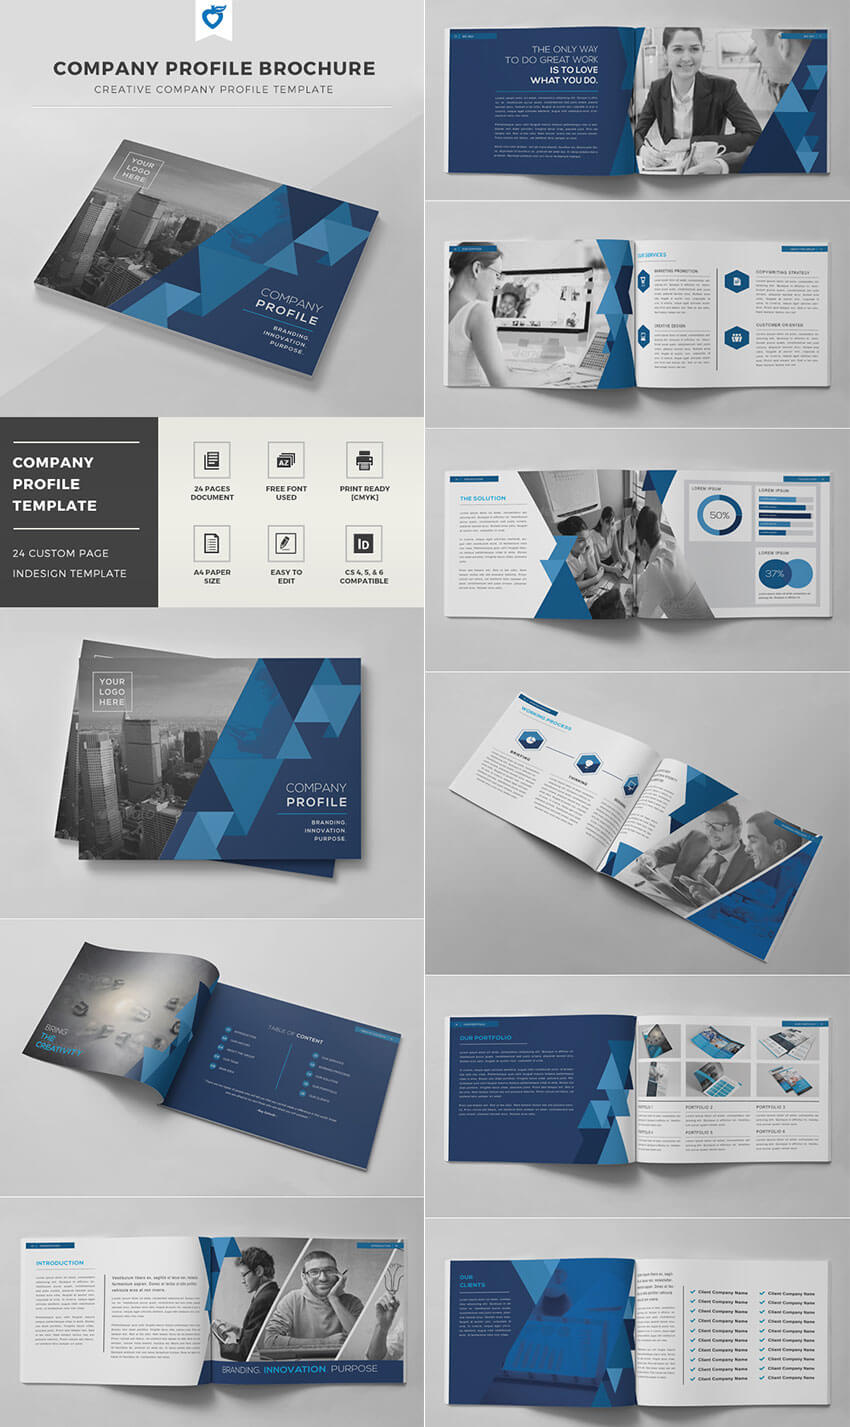 30 Best Indesign Brochure Templates – Creative Business Inside Adobe Indesign Brochure Templates